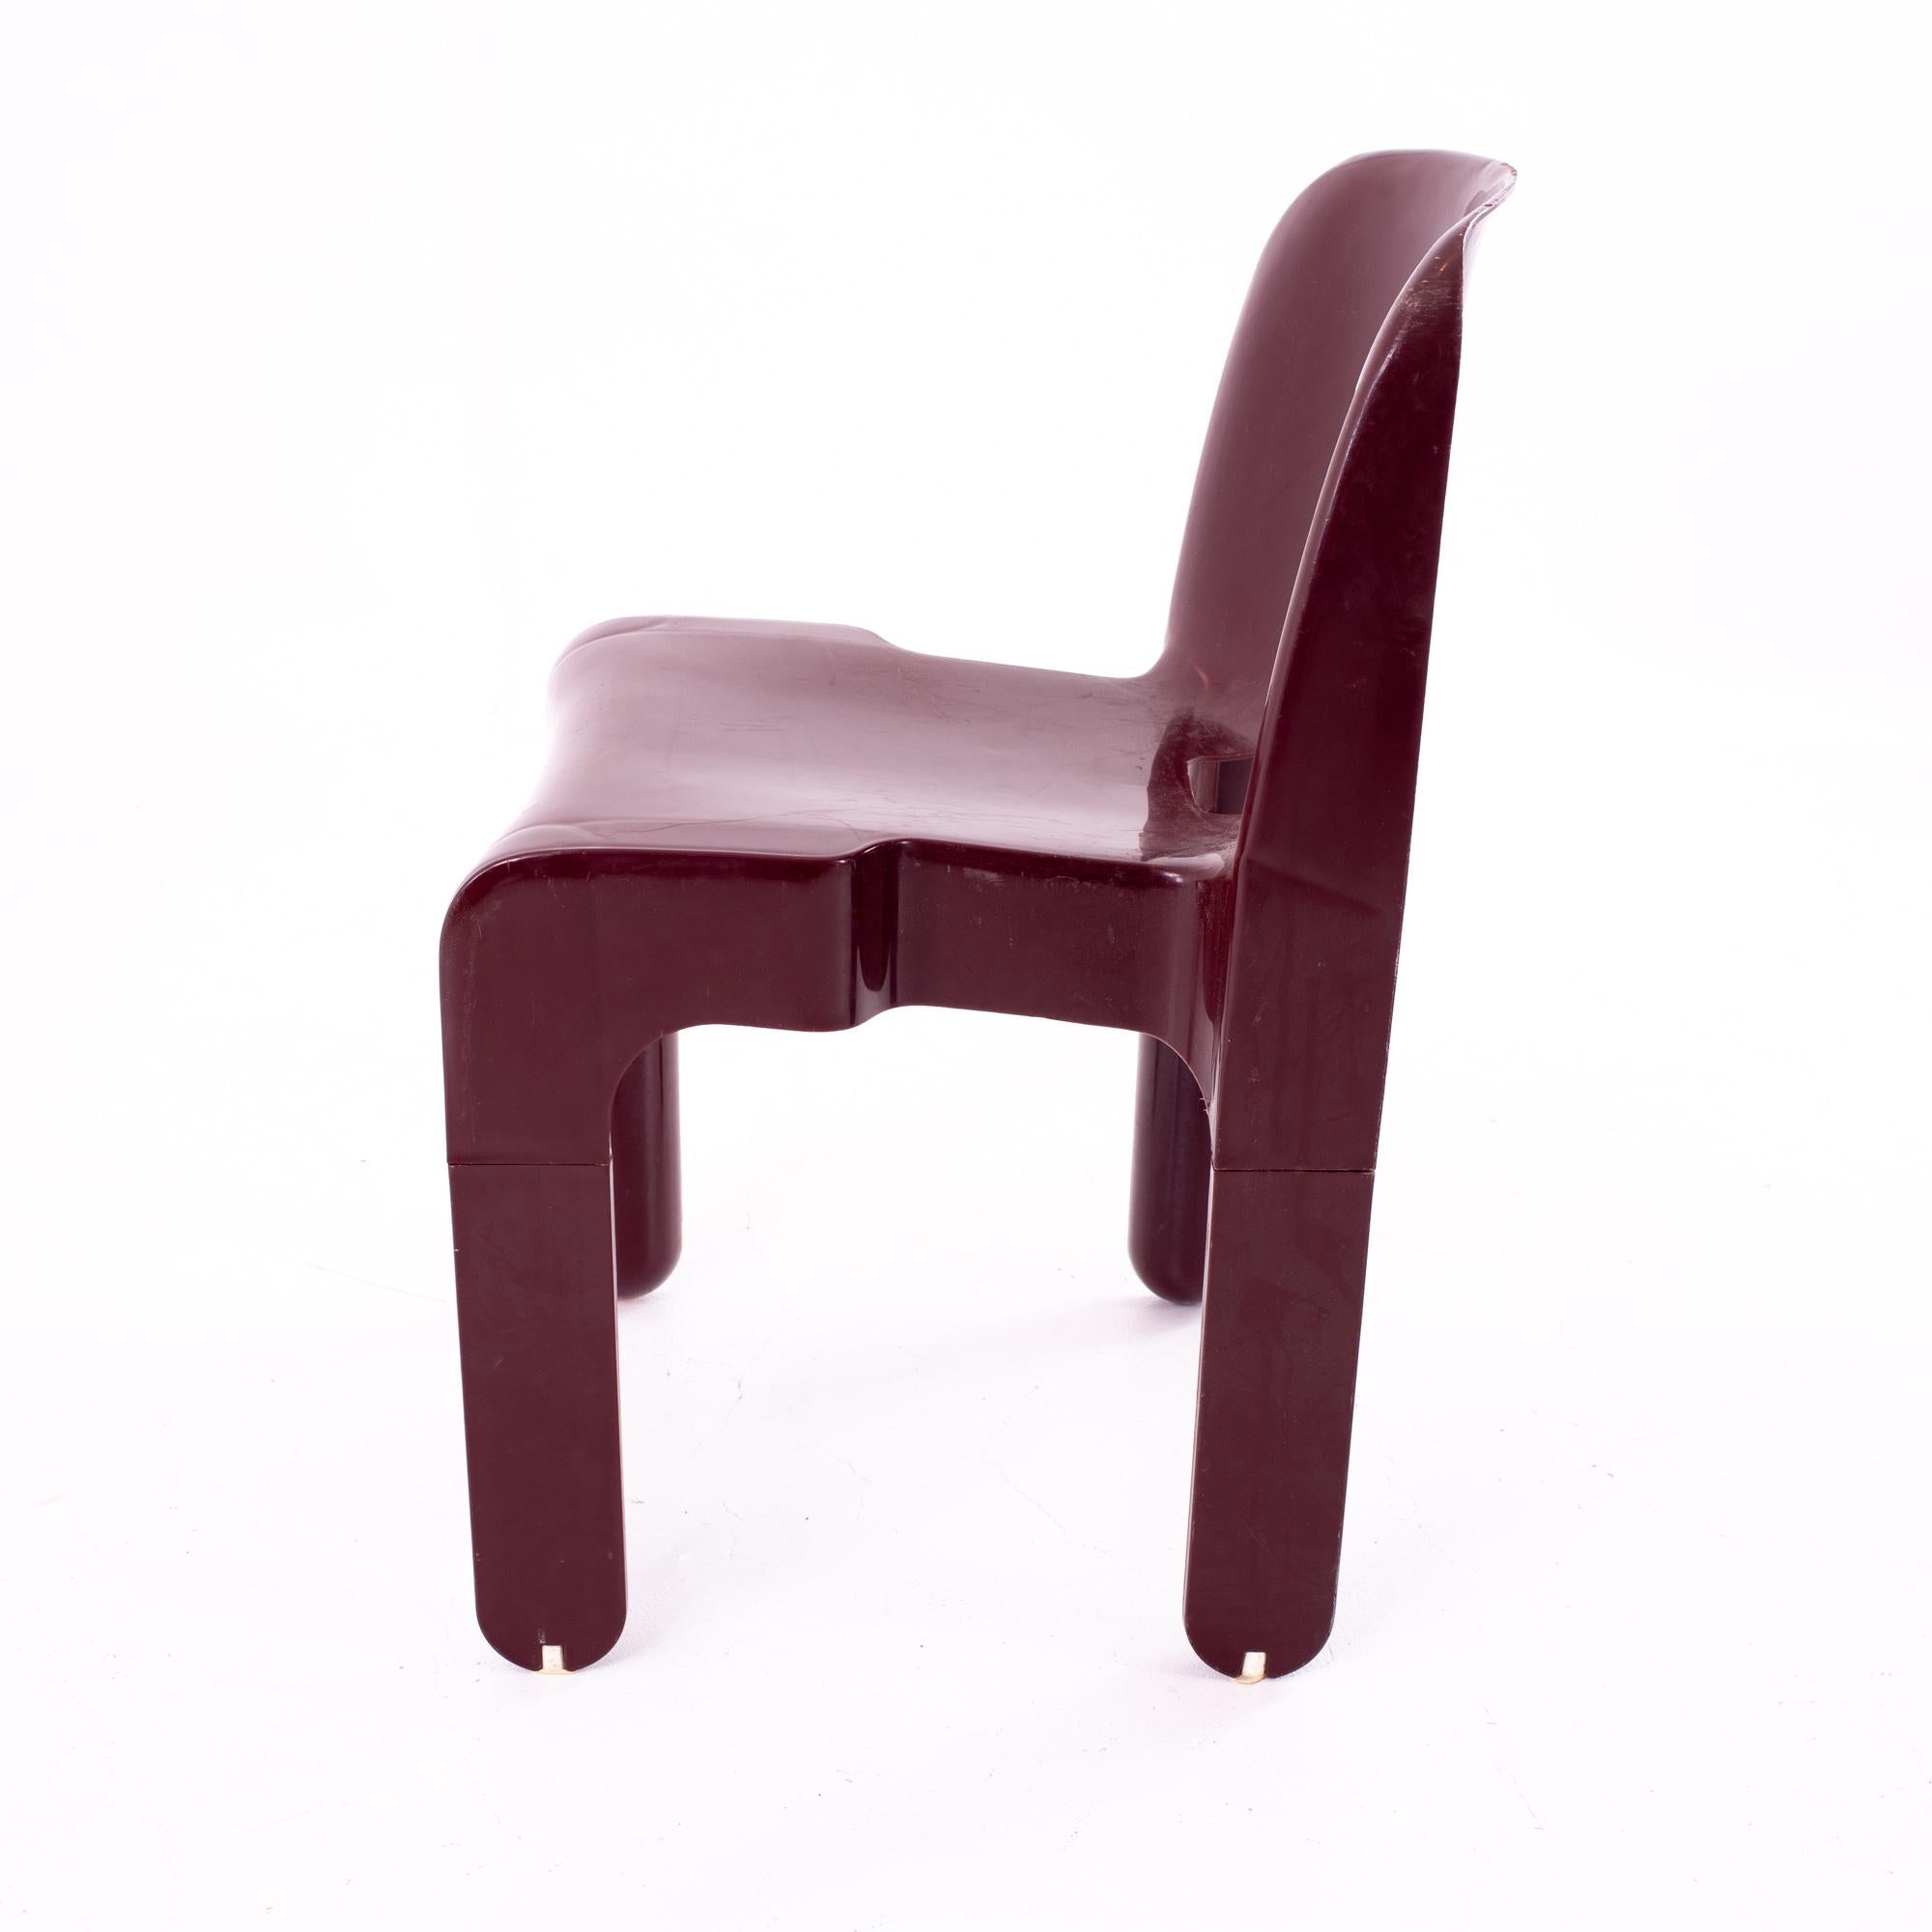 Joe Colombo Kartell Mid Century Plastic Chairs, Pair 2